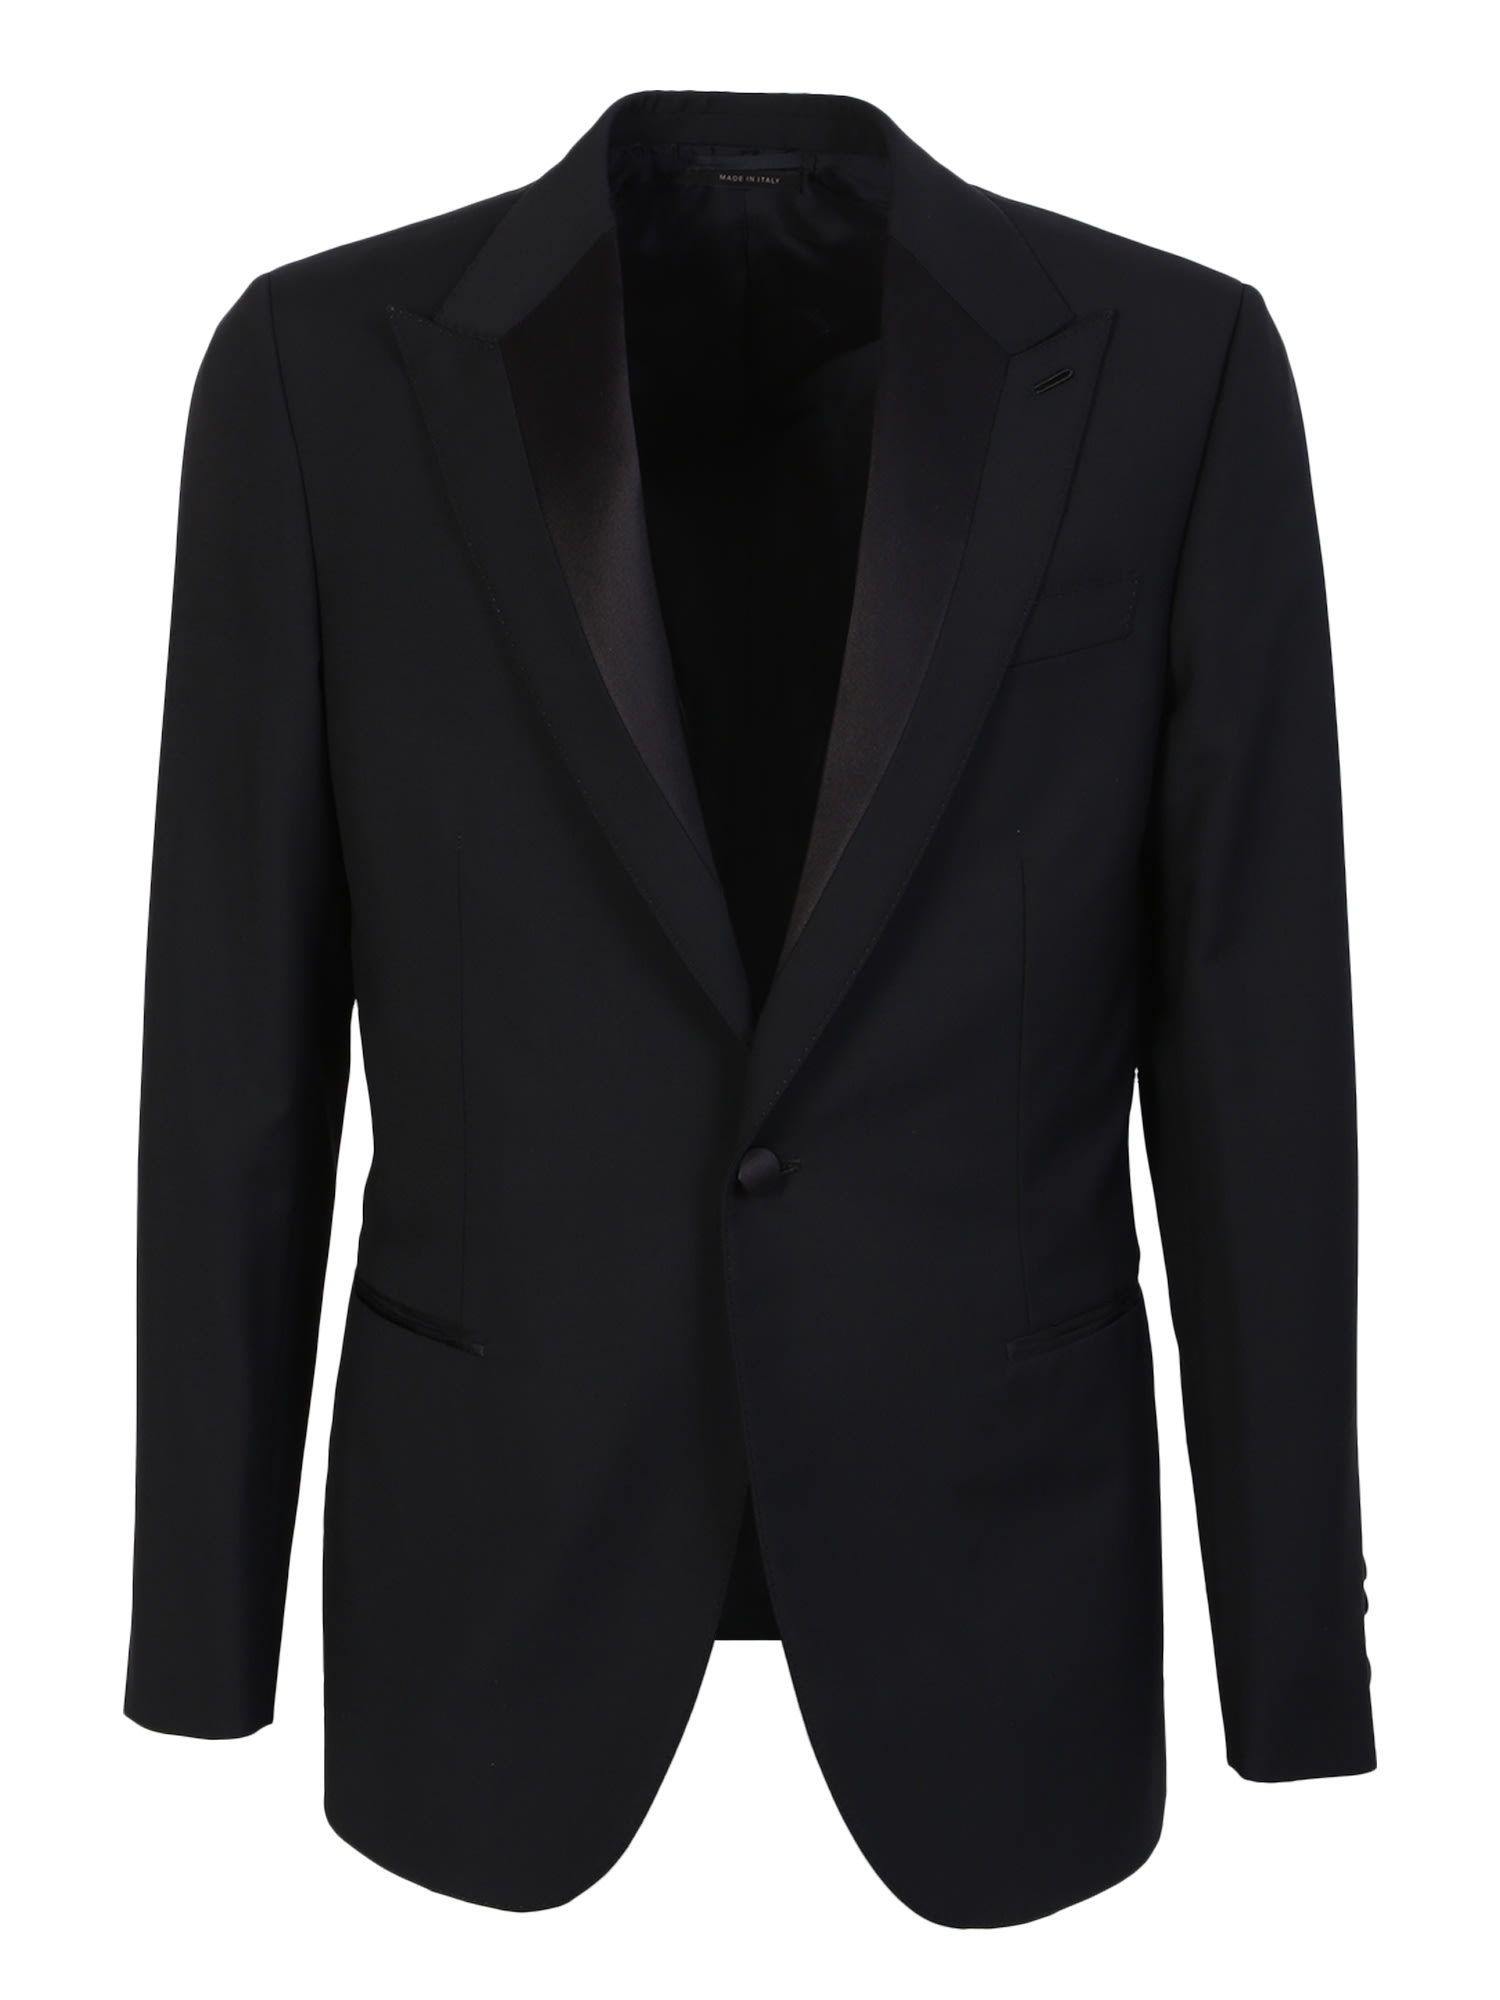 Shop Brioni Perseo Black Dinner Suit